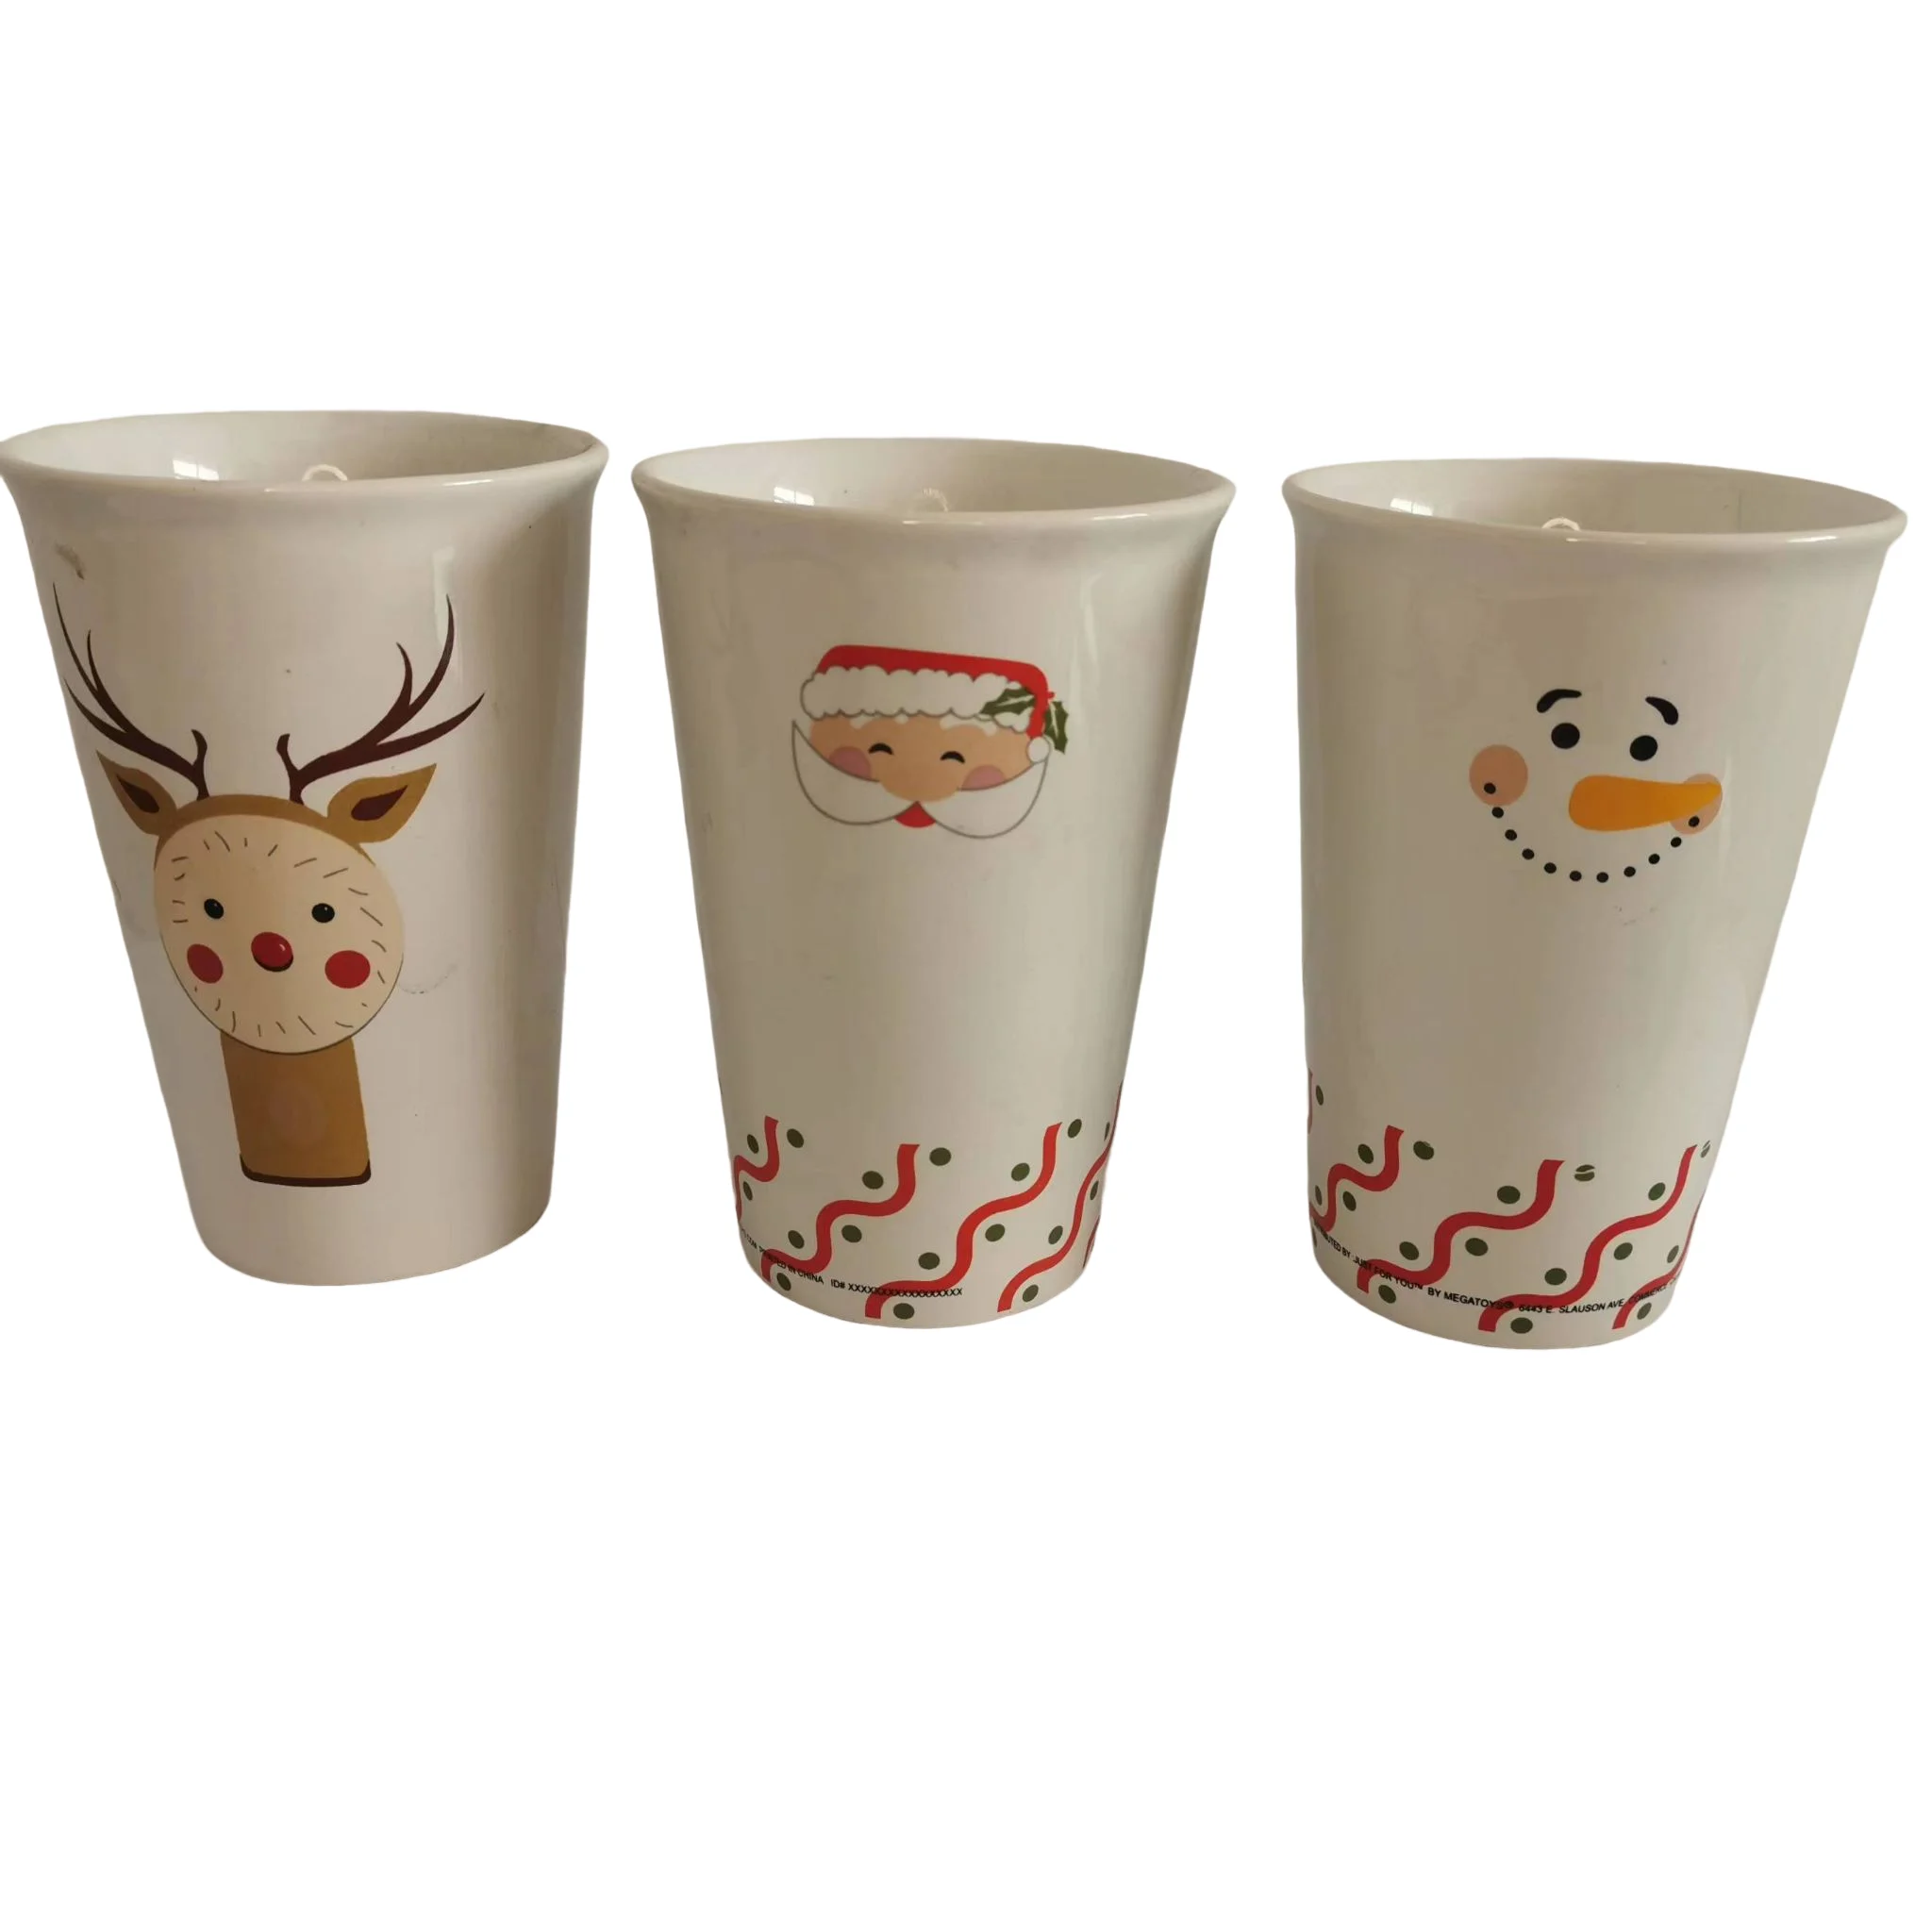 Sunmeta two tone mug ceramic cups 11oz handle solid color inside coffee mugs for sublimation printing ceramic mugs